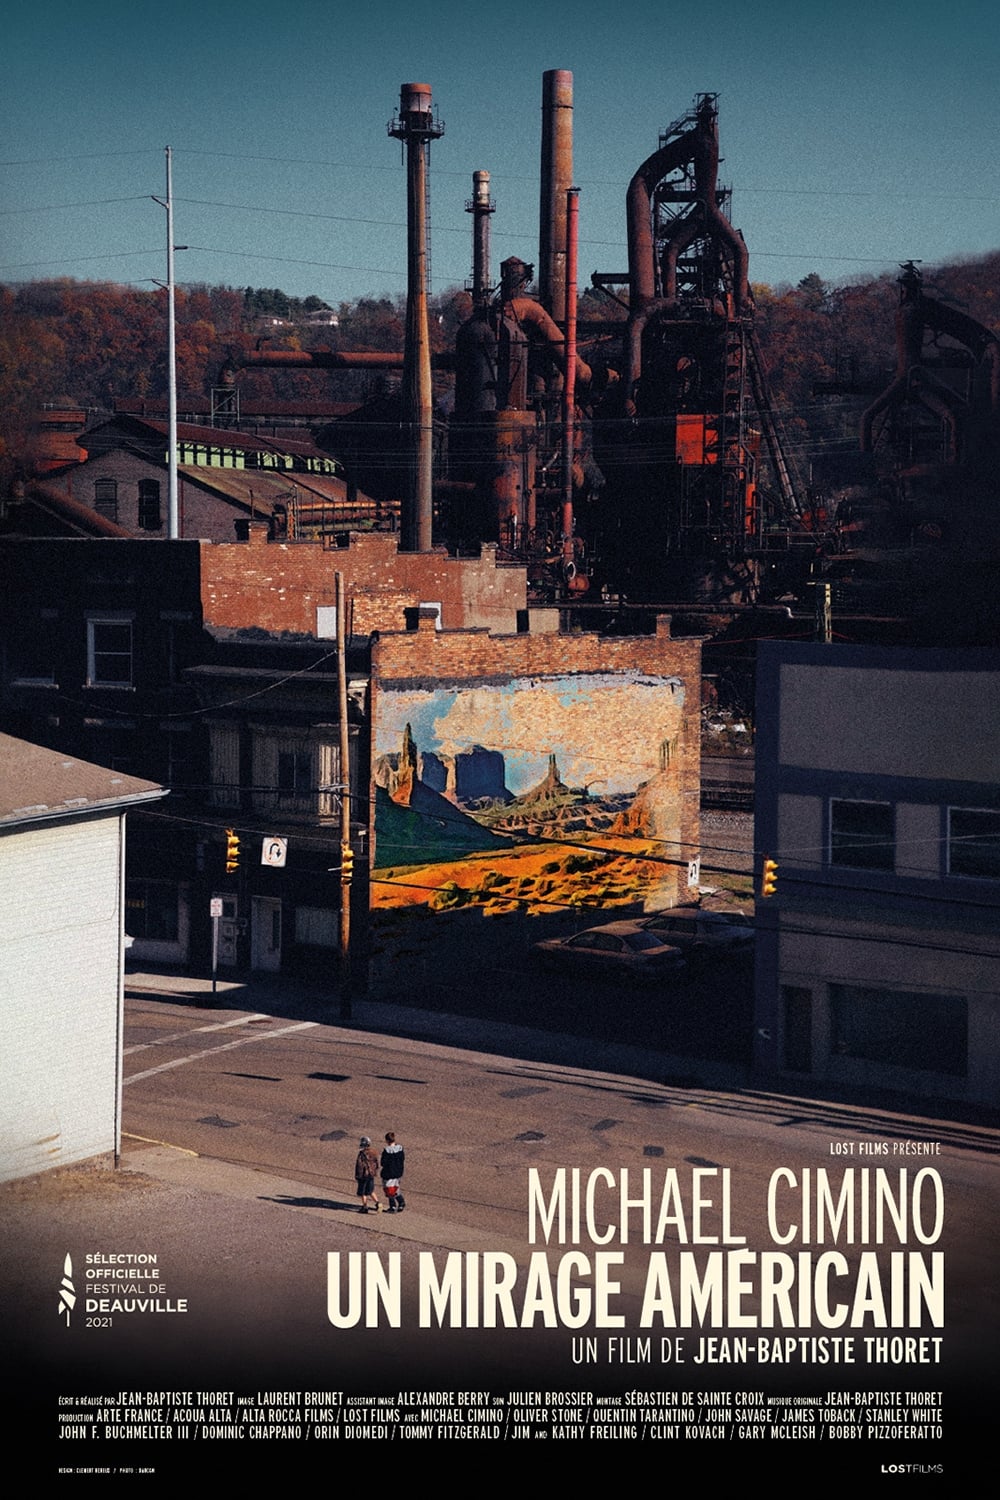 Michael Cimino, God Bless America